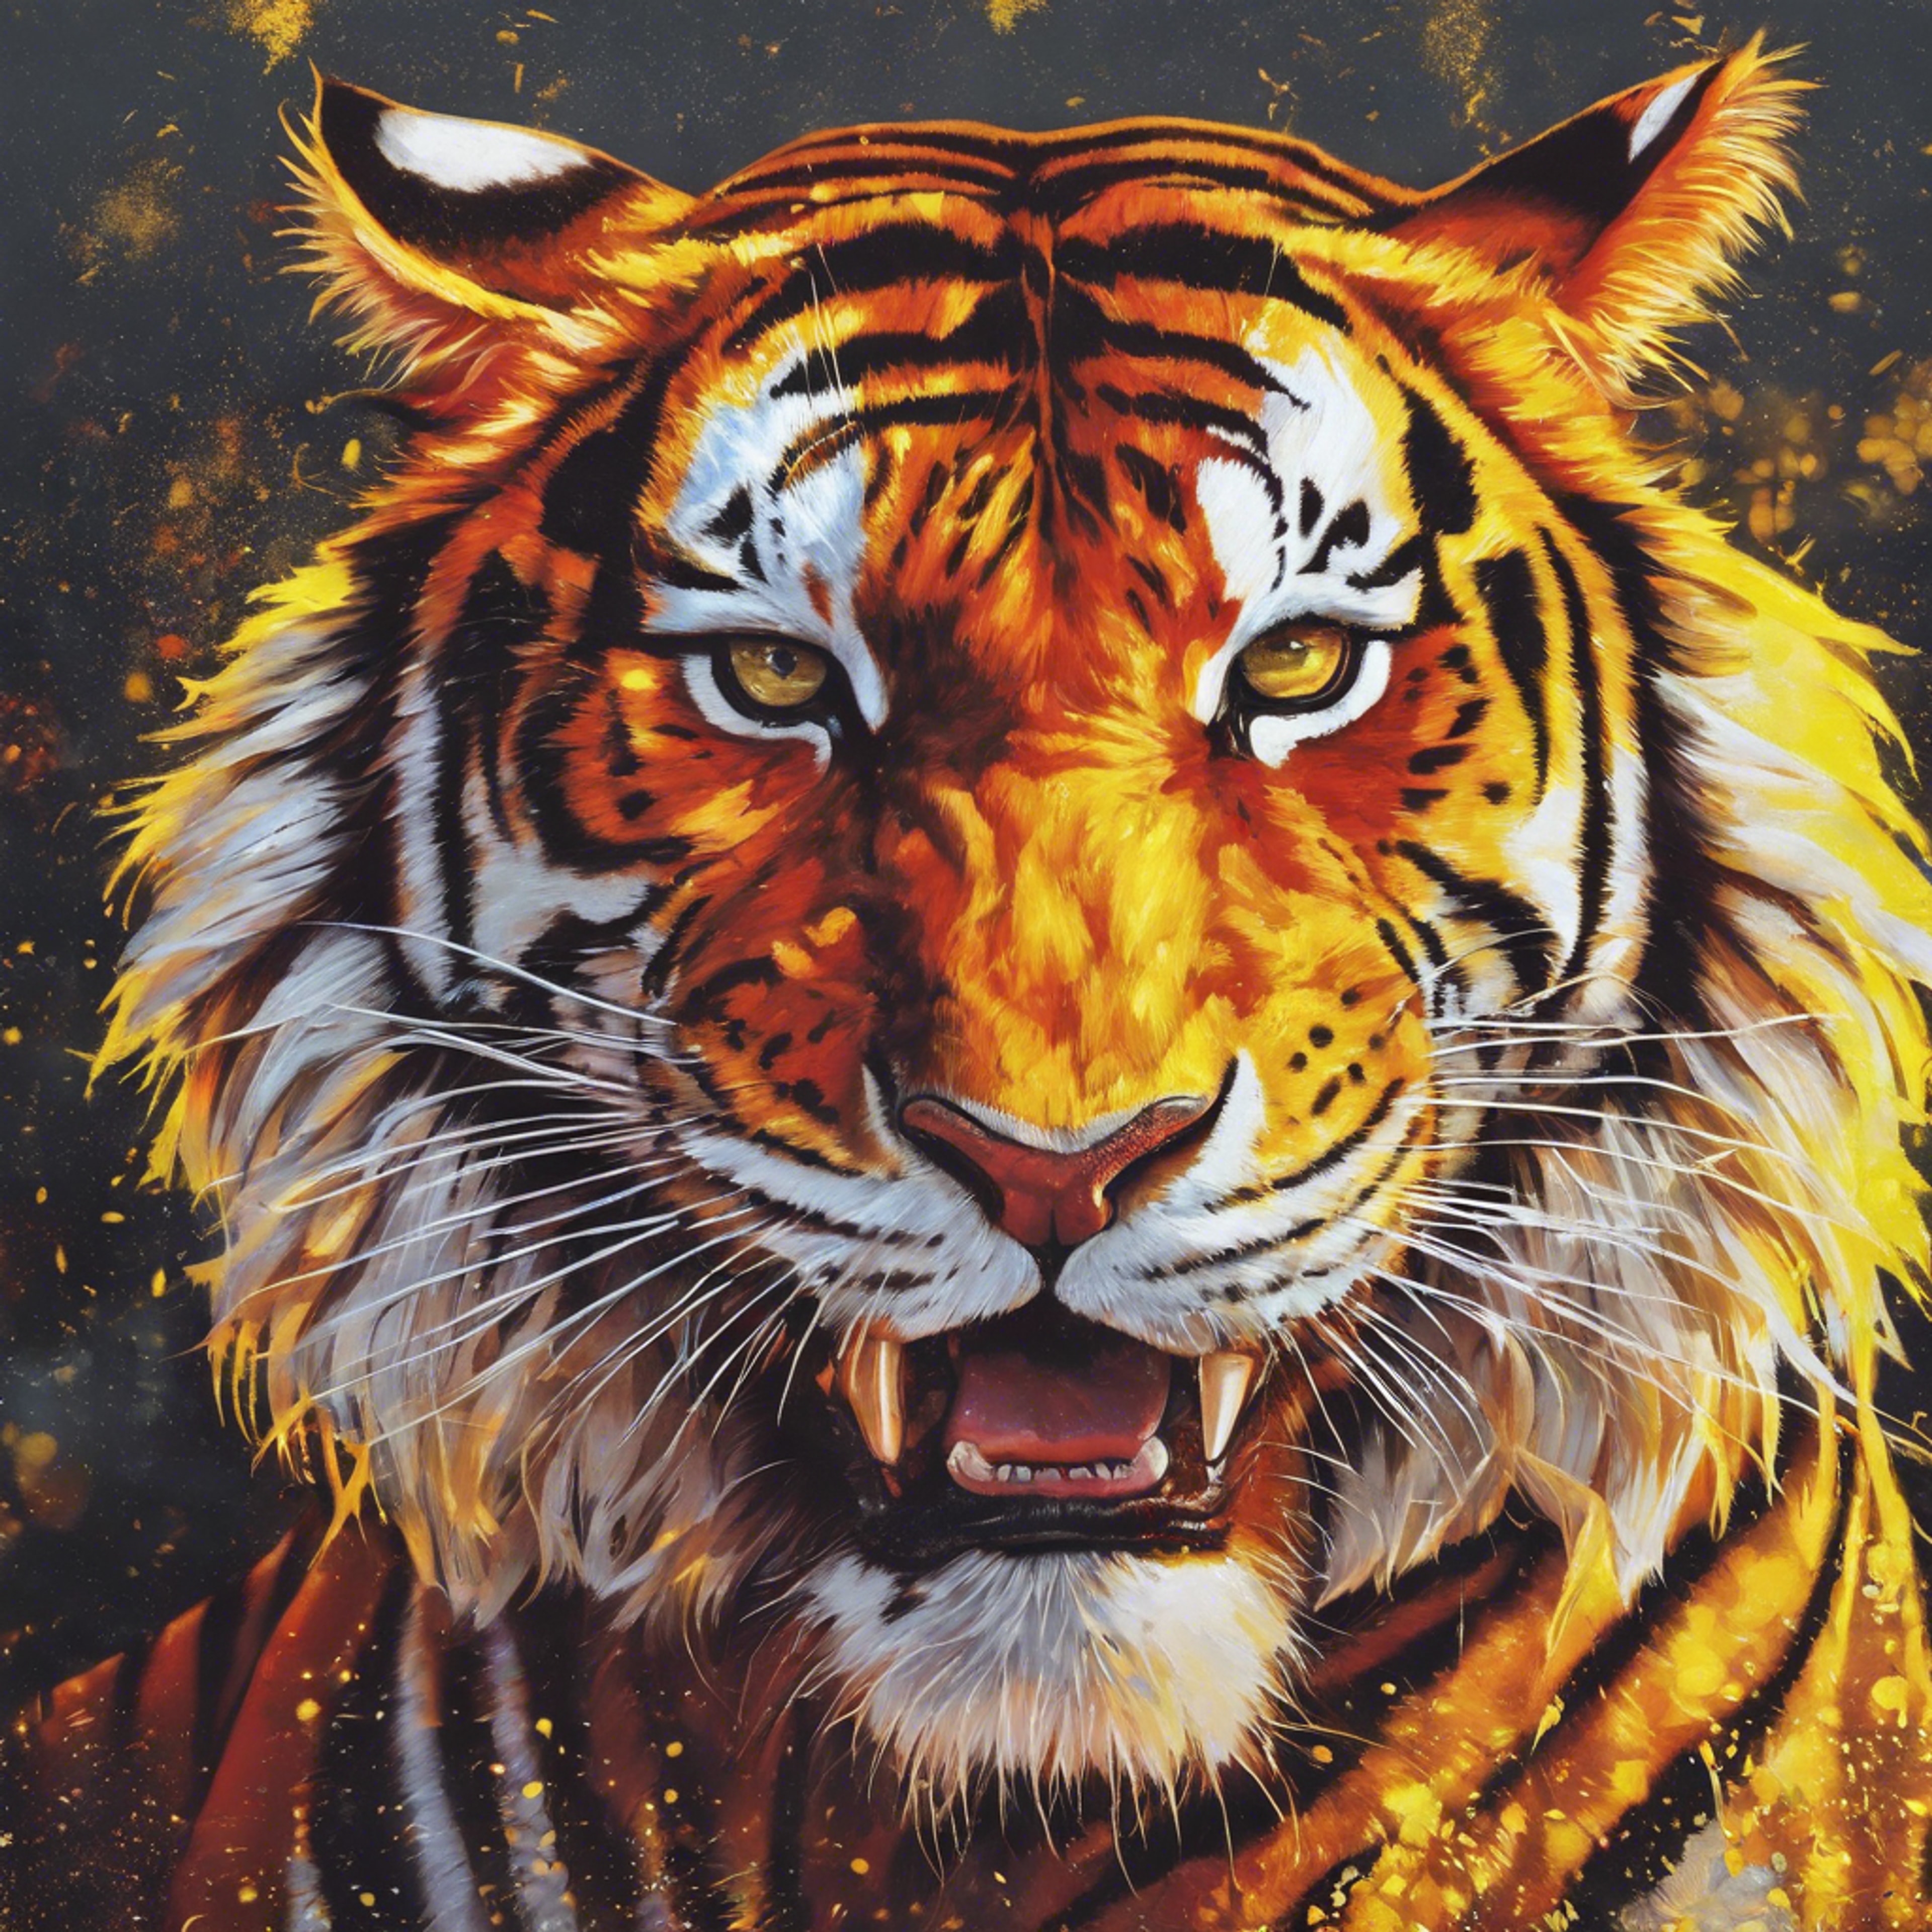 A mural featuring a cool red tiger roaring, under a bright yellow sun, symbolizing strength and energy. ផ្ទាំង​រូបភាព[b92d4e06da1a4dd6b9b7]